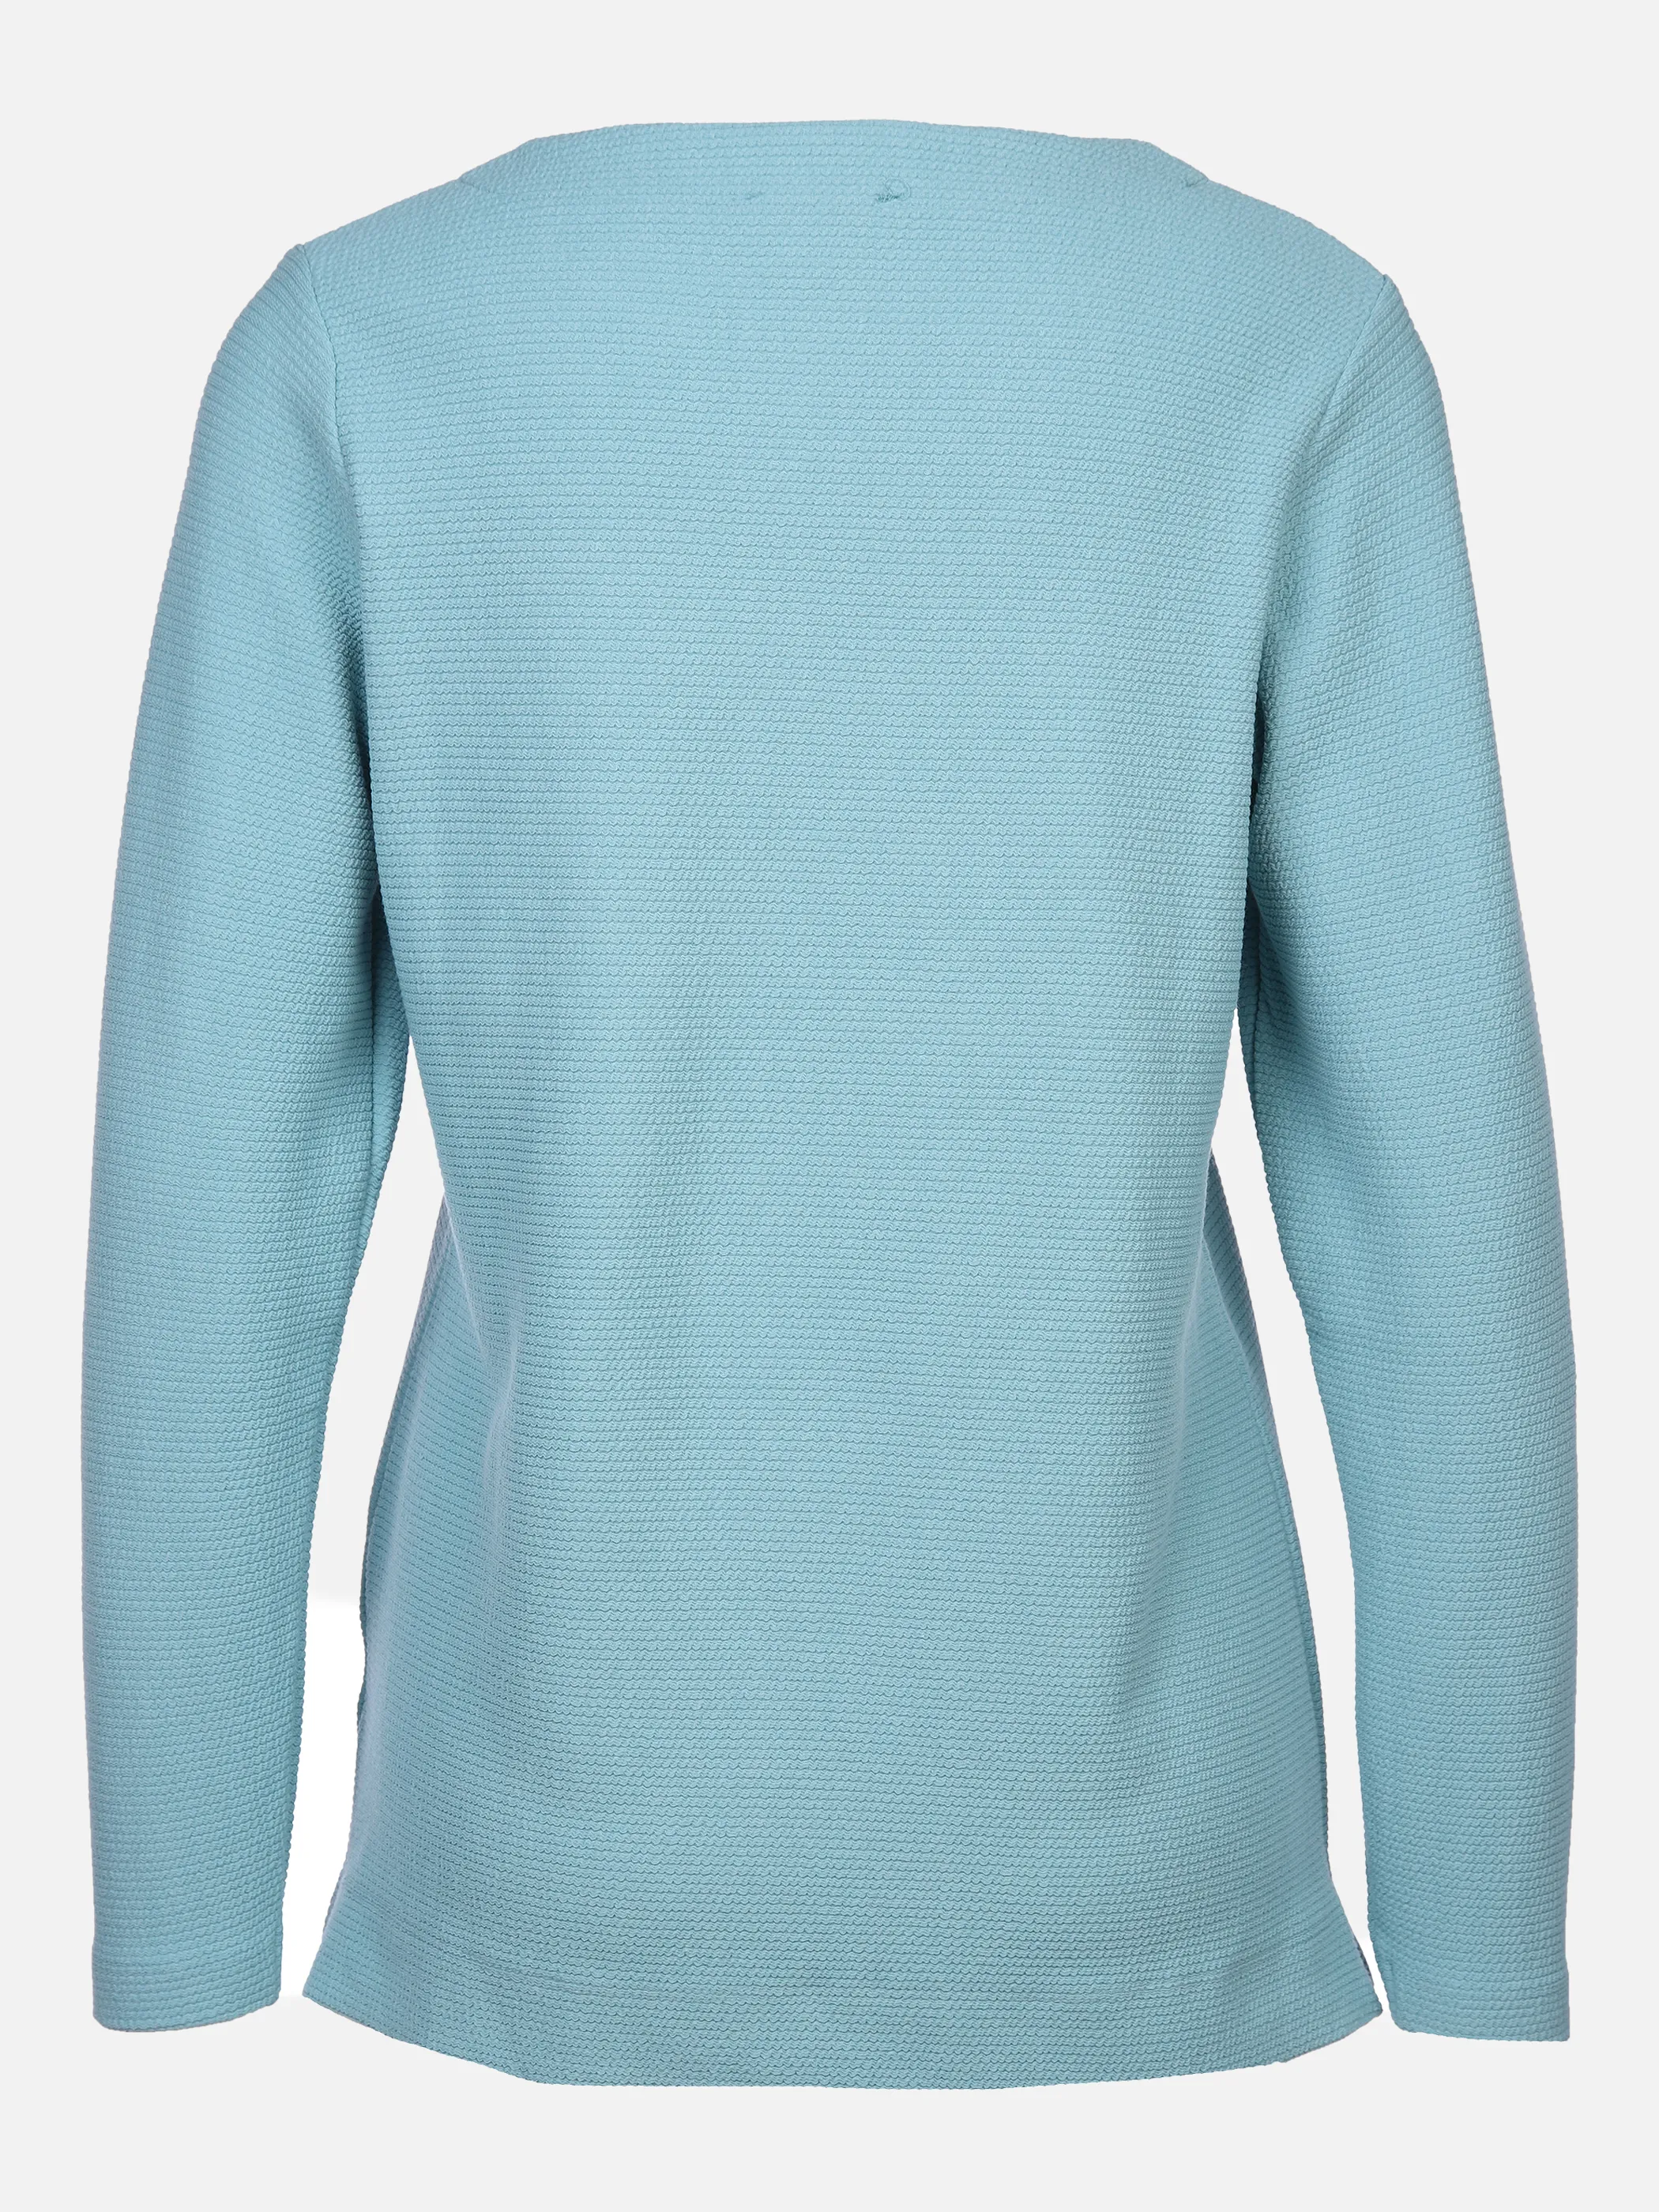 Lisa Tossa Da-Jaquardt-Sweatshirt Basic Blau 867608 MINZE 2